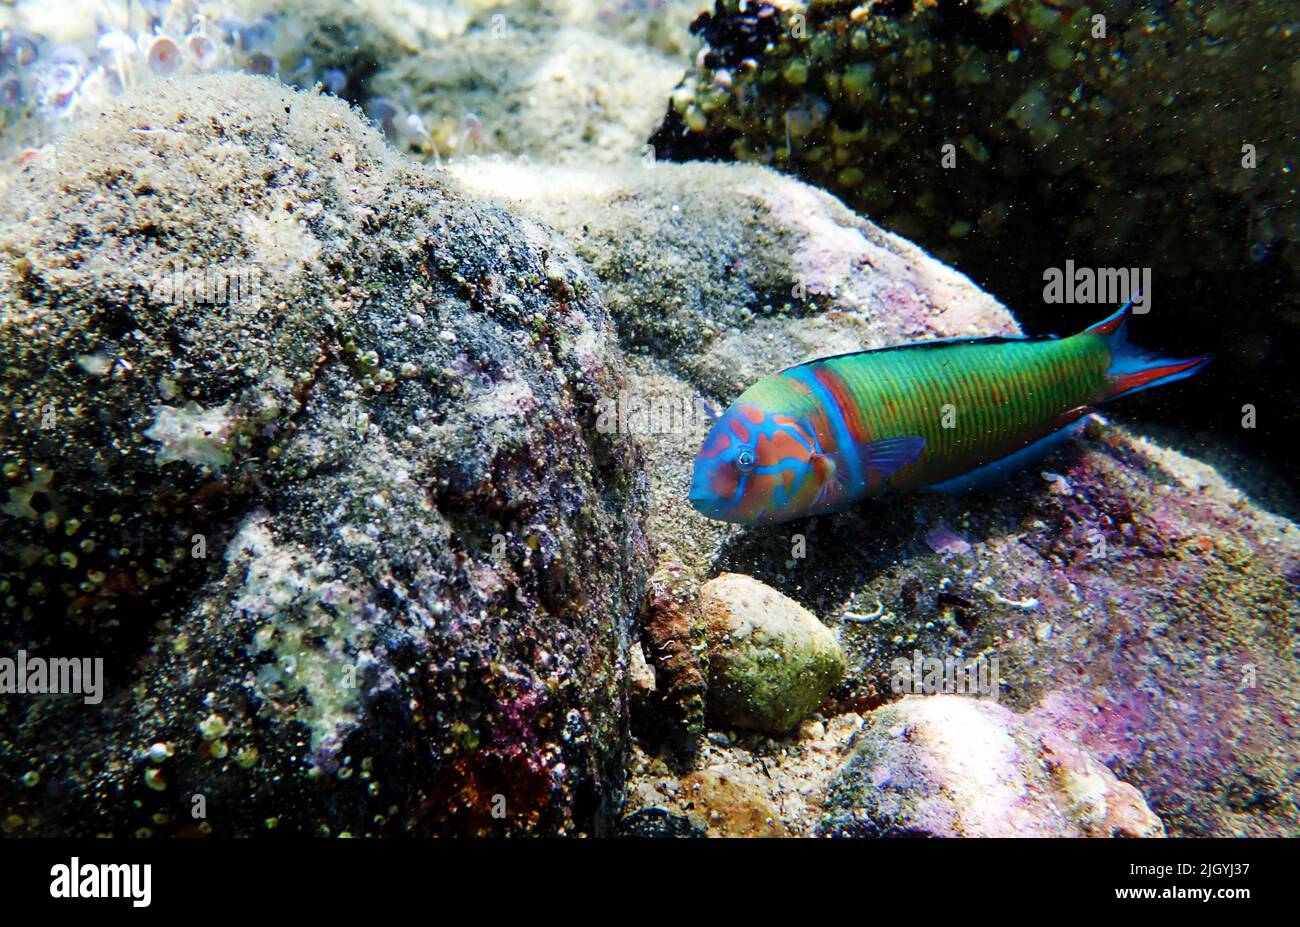 Green male ornate wrasse fish in Mediterranean sea - Thalassoma pavo Stock Photo